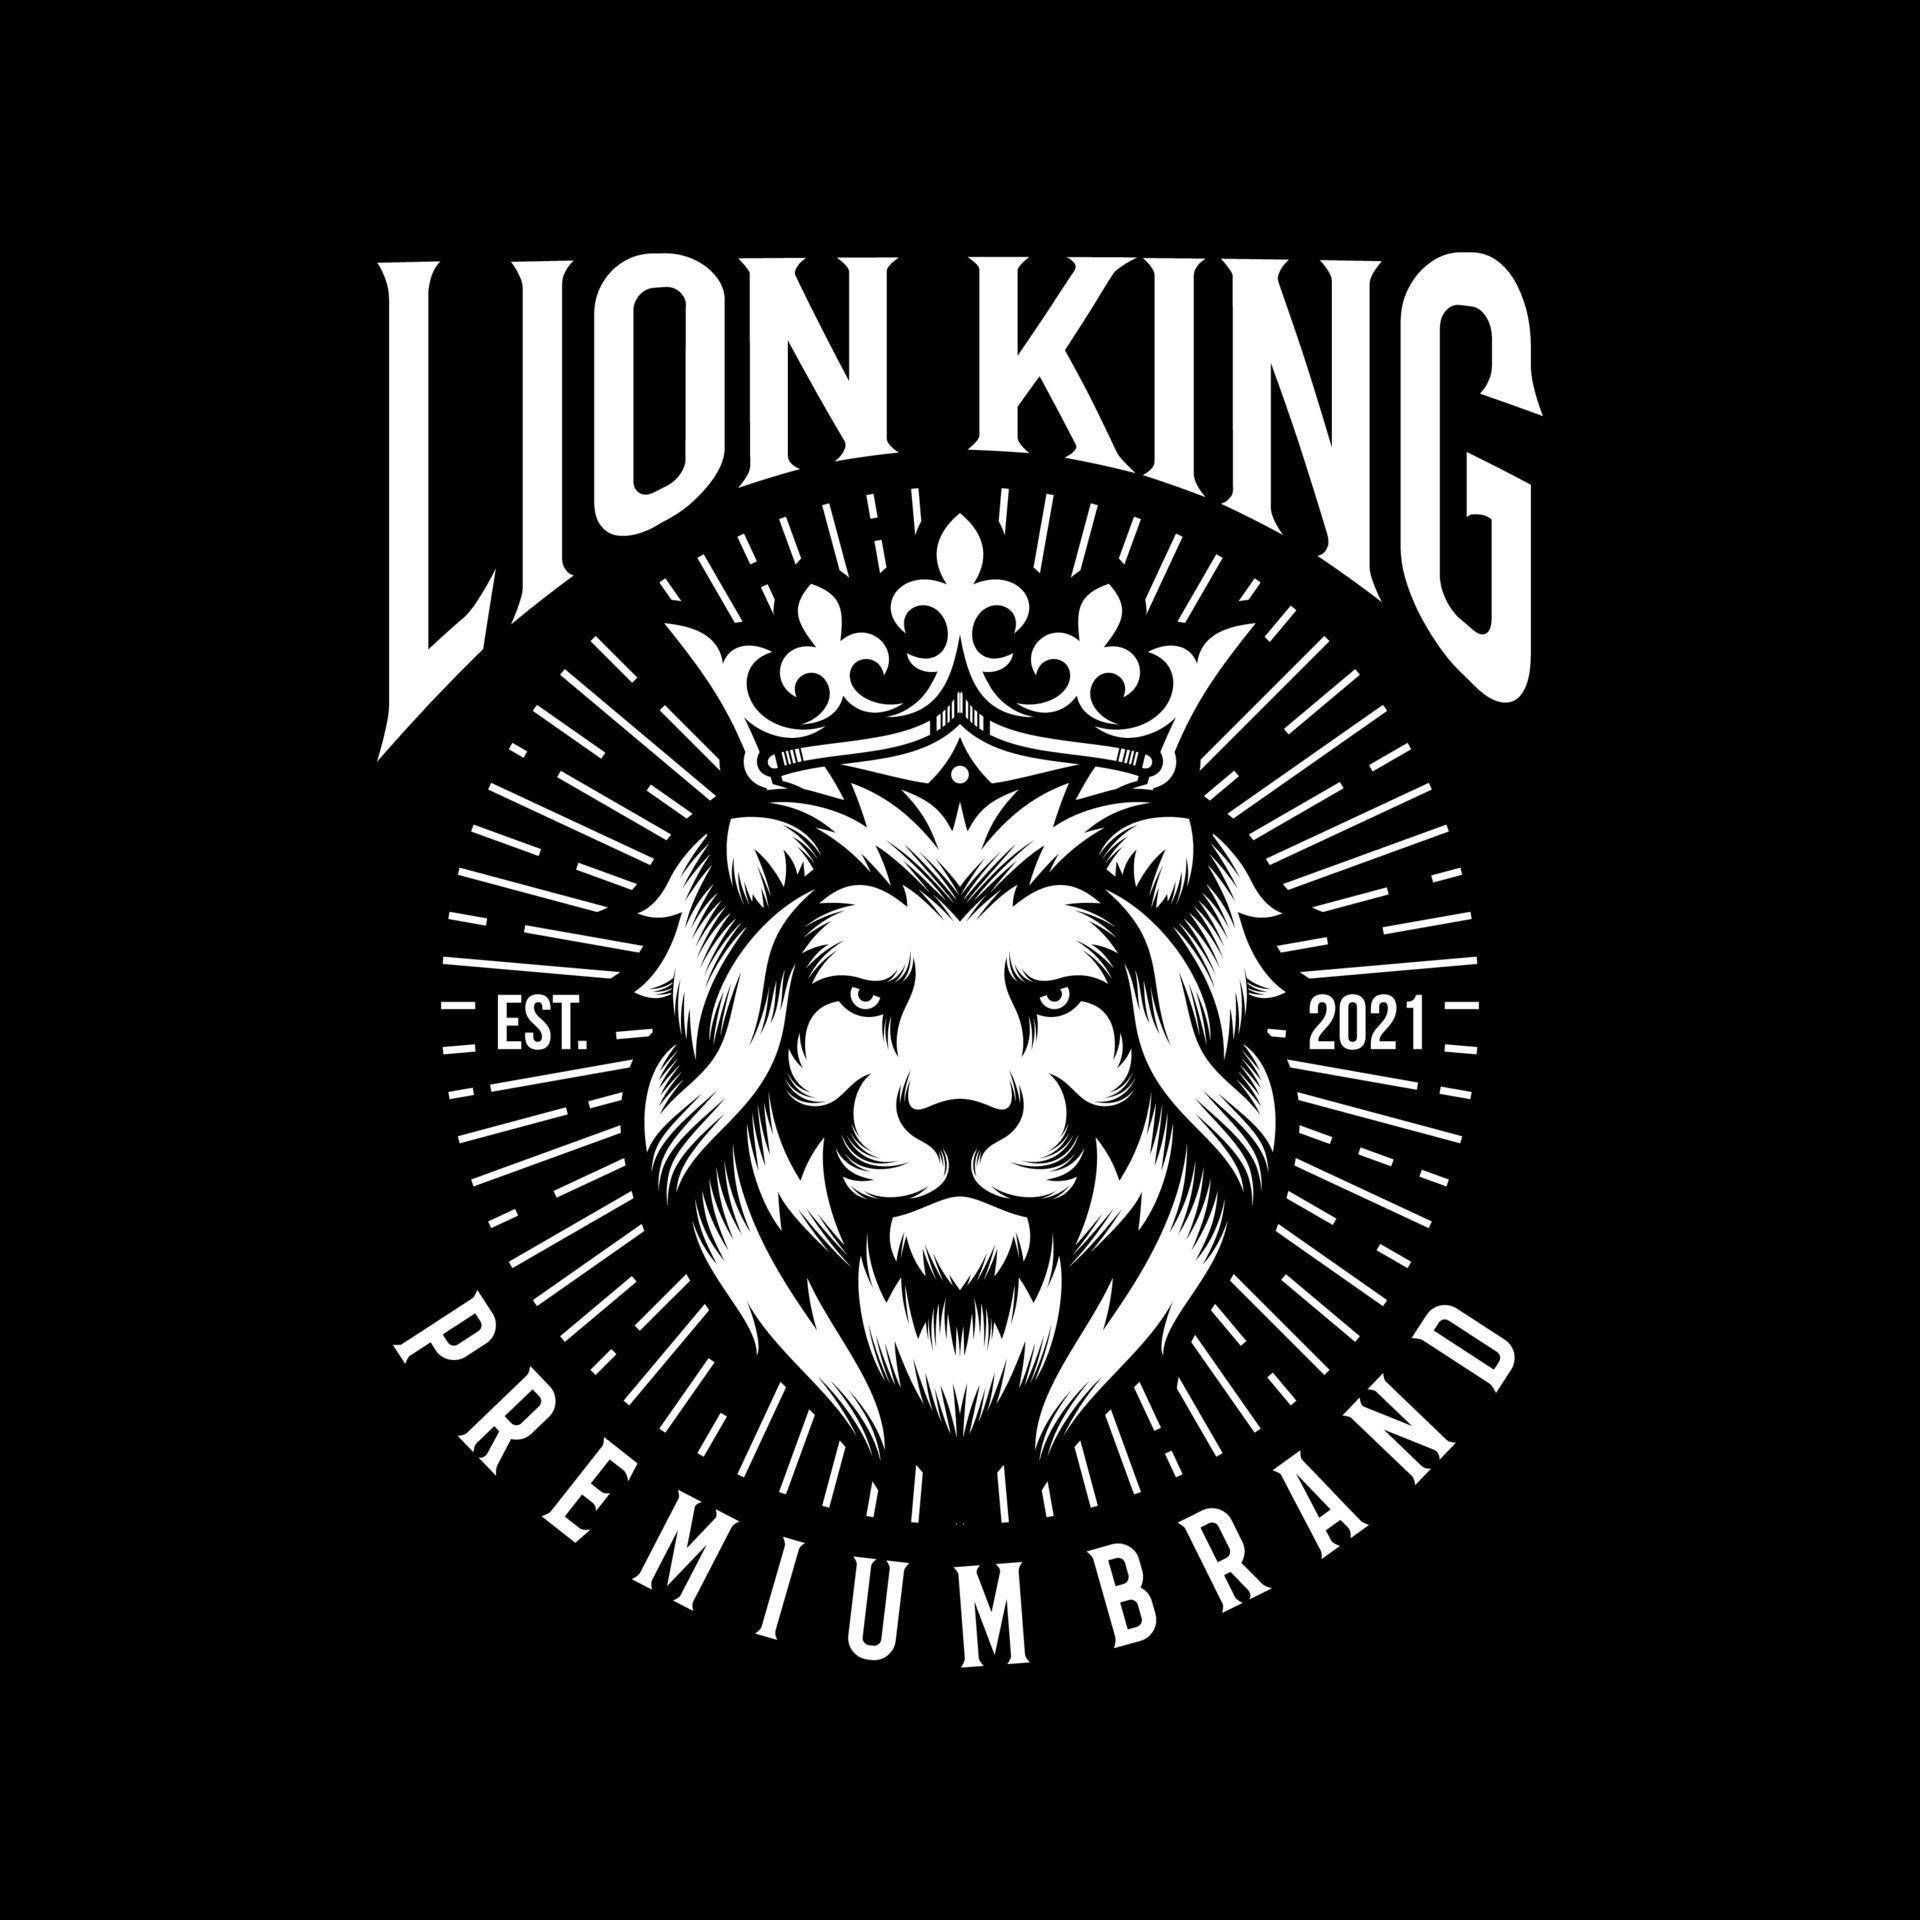 Luxury Golden Royal Lion King logo design inspiration 6735483 Vector ...